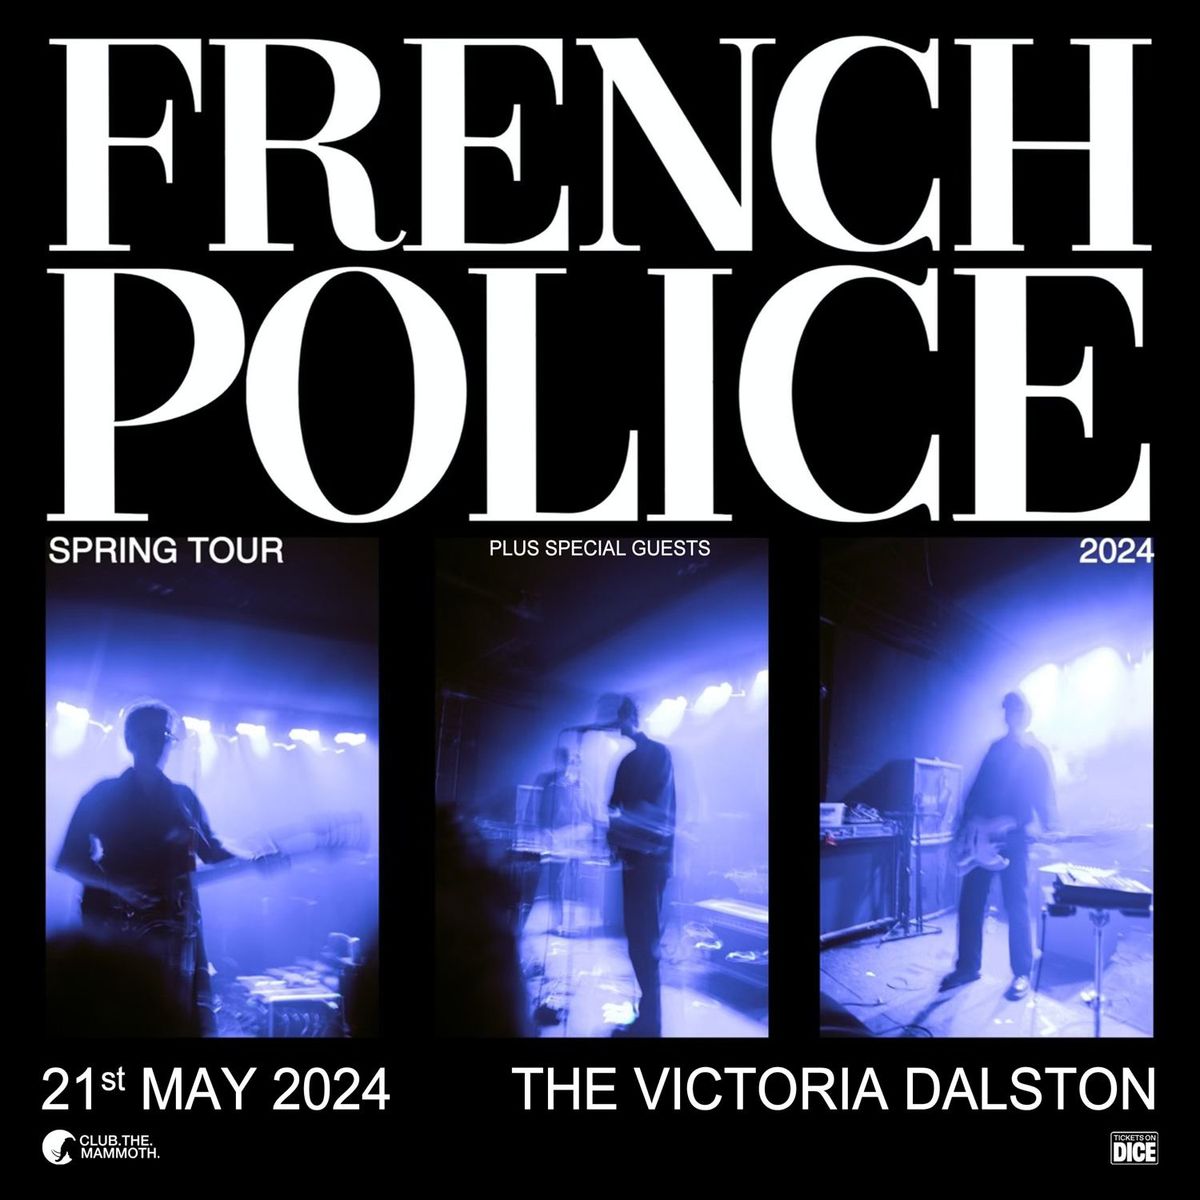 French Police | The Victoria Dalston